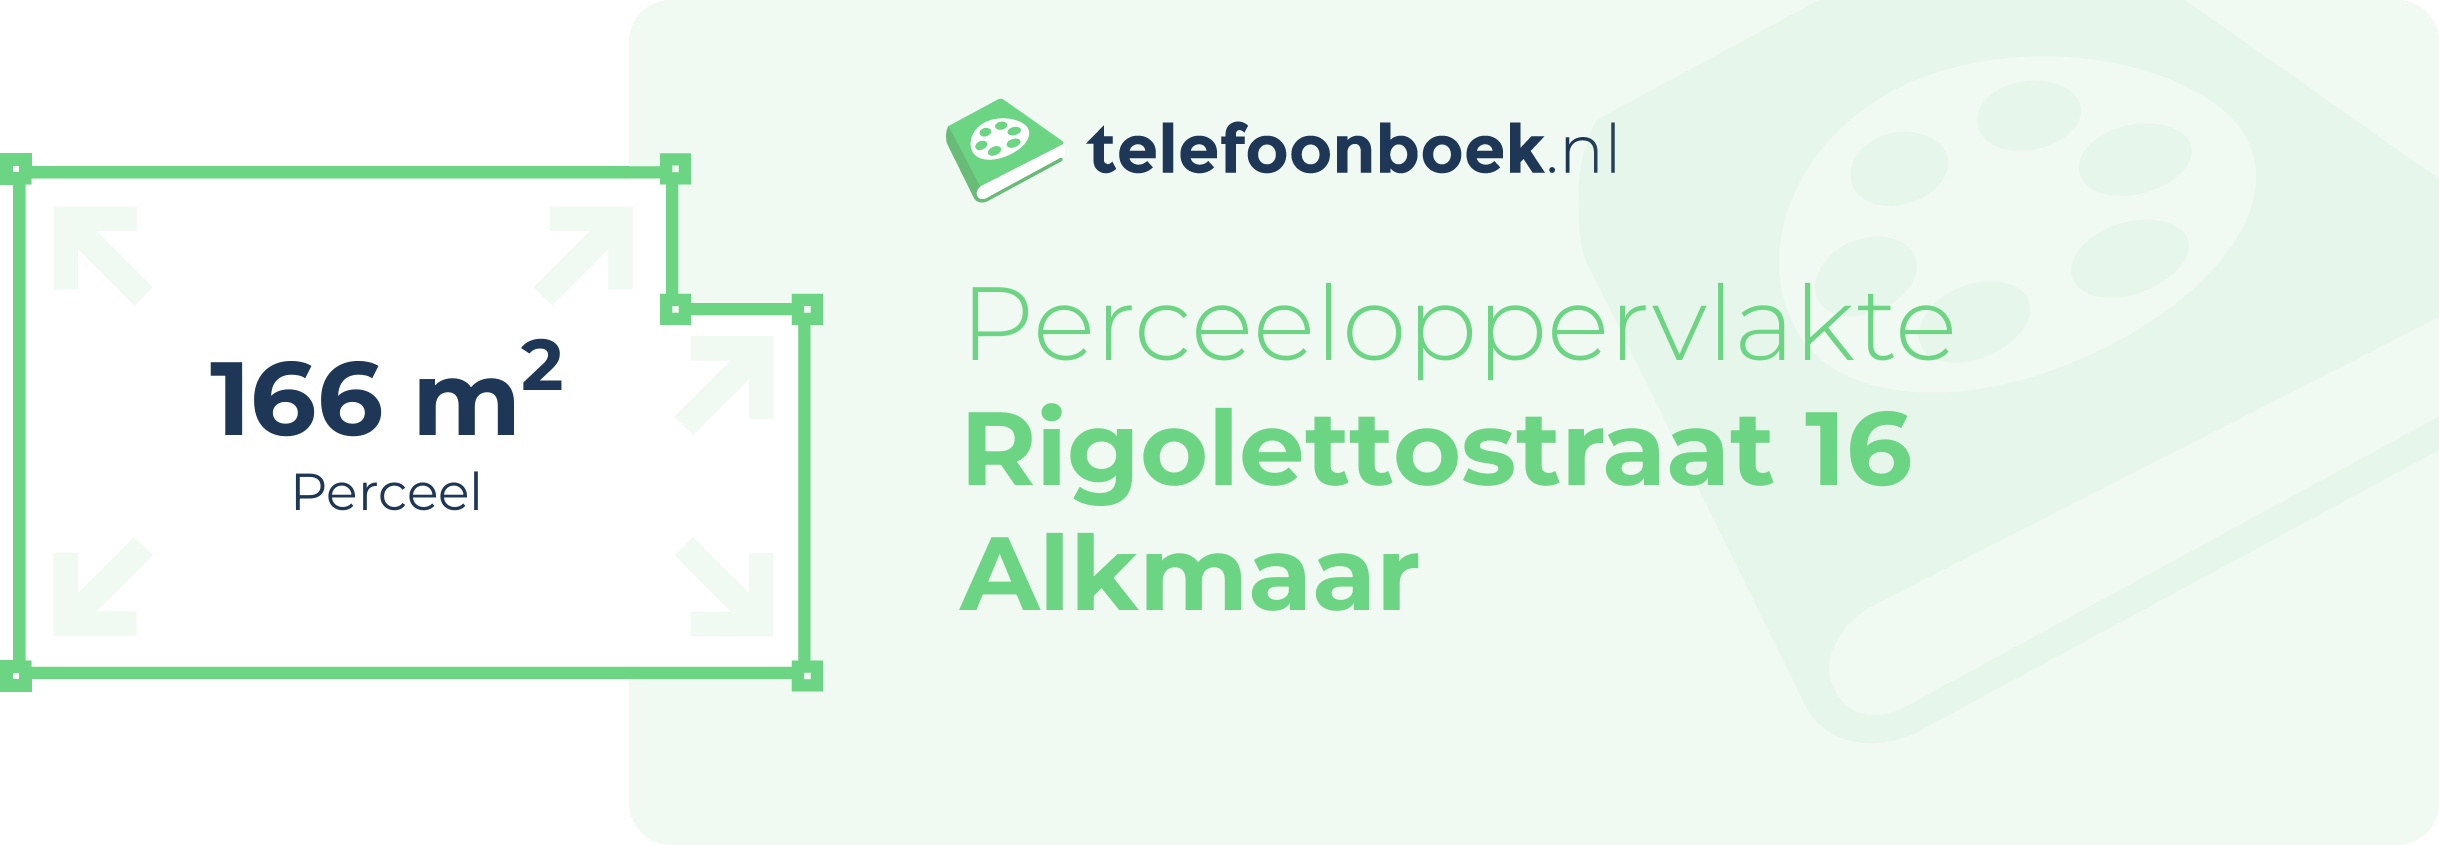 Perceeloppervlakte Rigolettostraat 16 Alkmaar